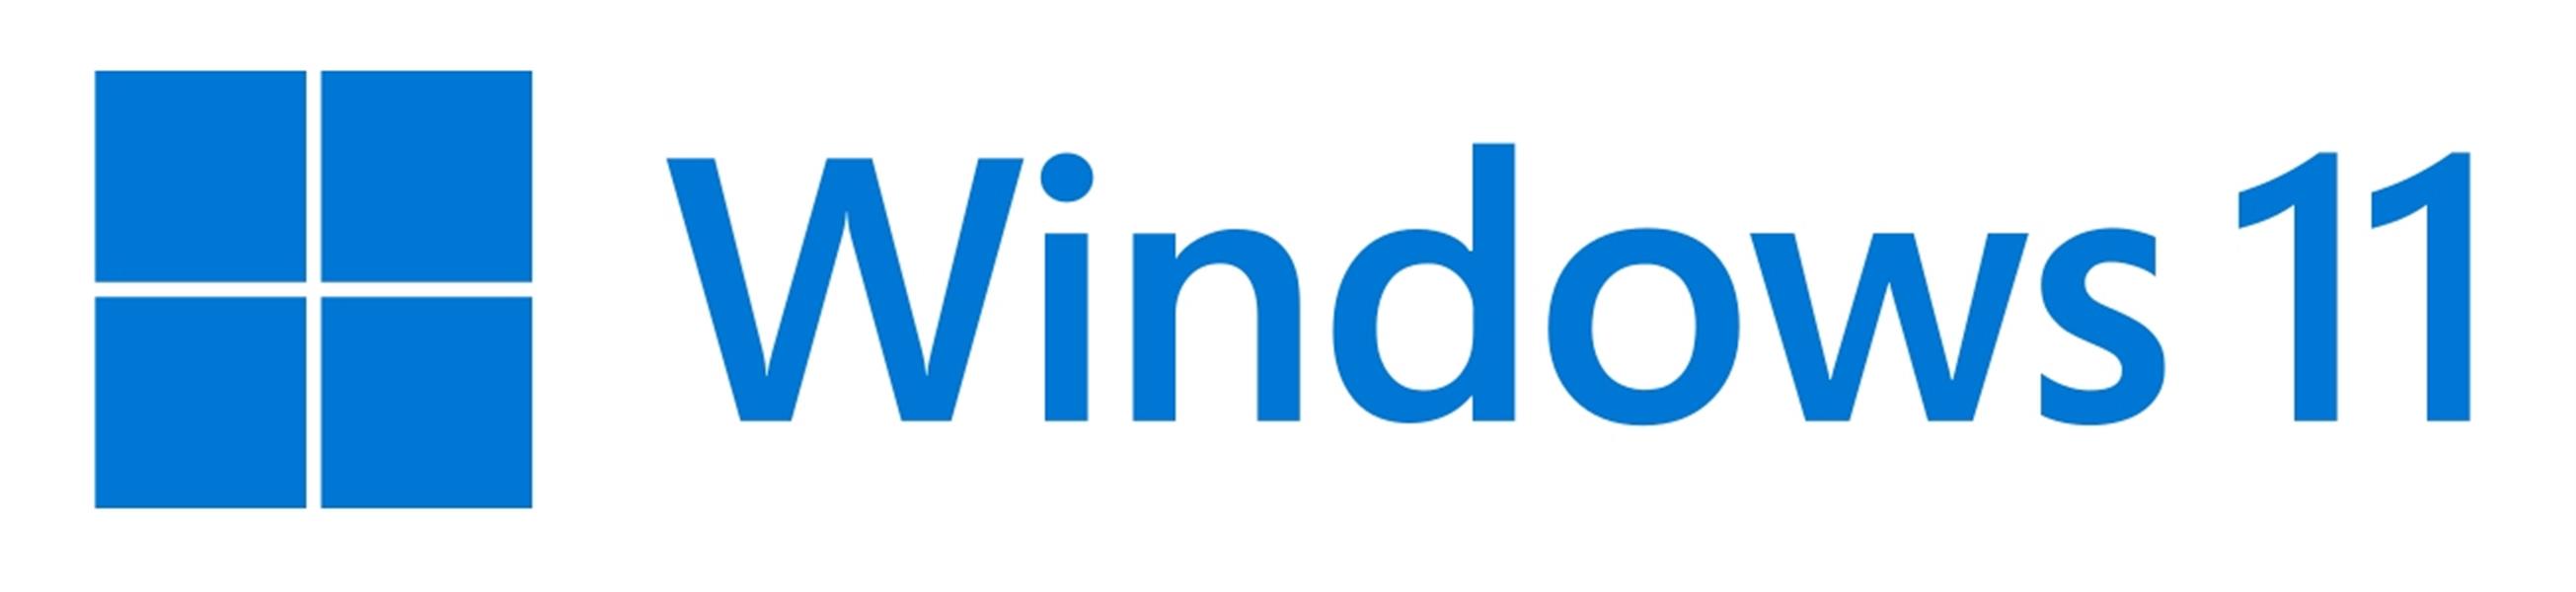 Microsoft Windows 11 Pro 1 licentie(s)